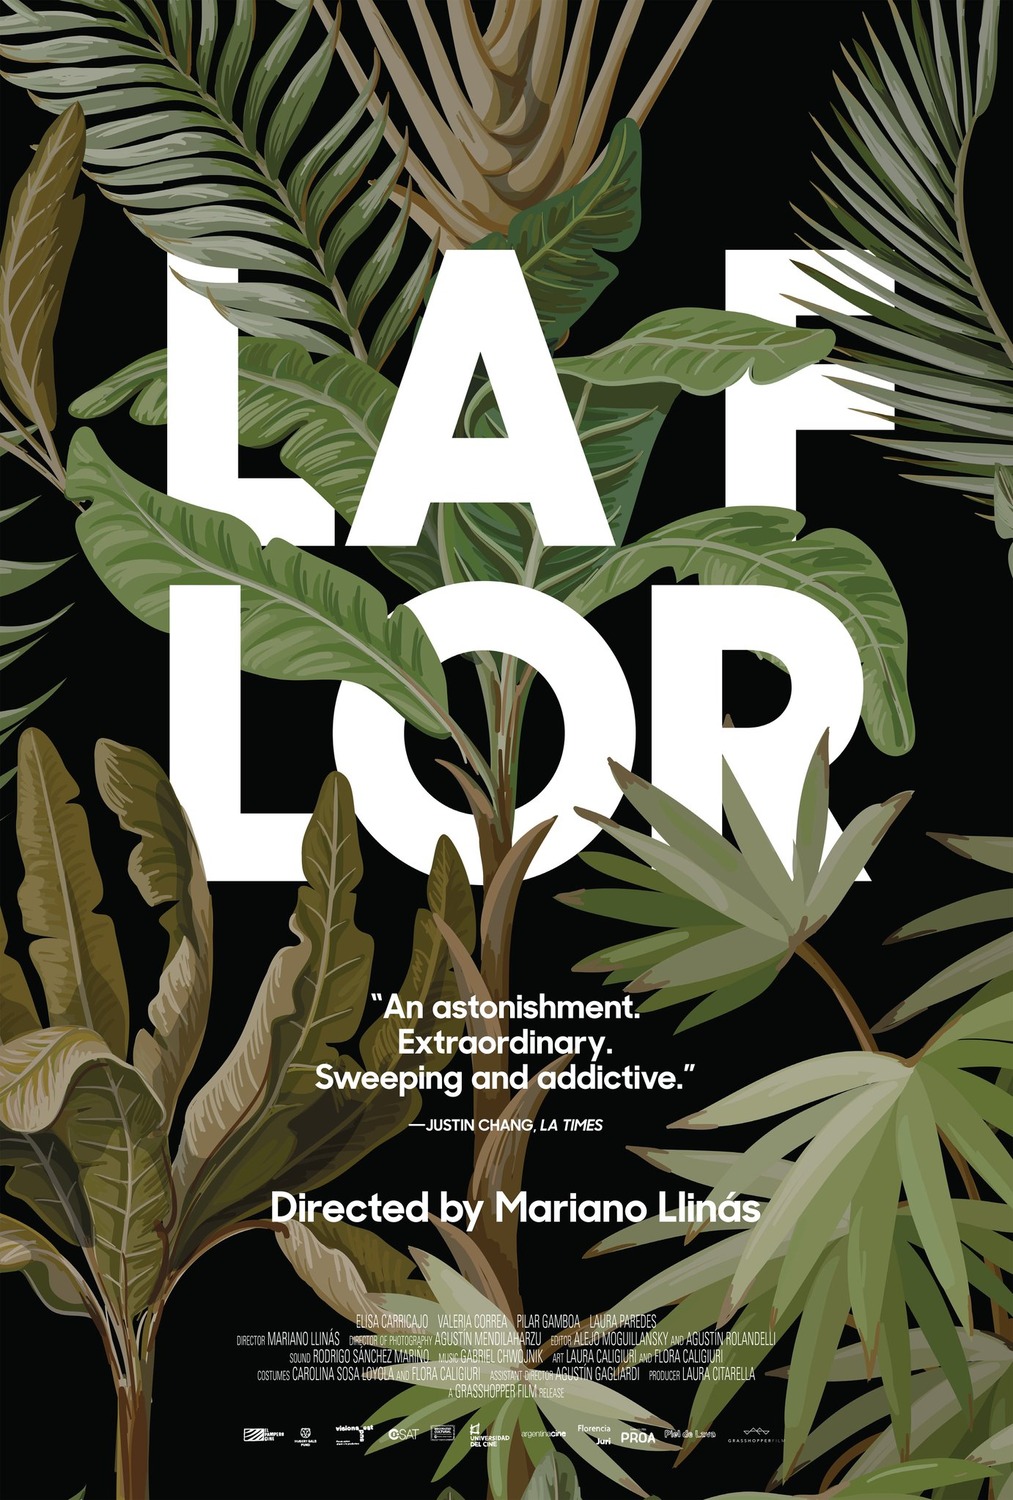 Extra Large Movie Poster Image for La flor 